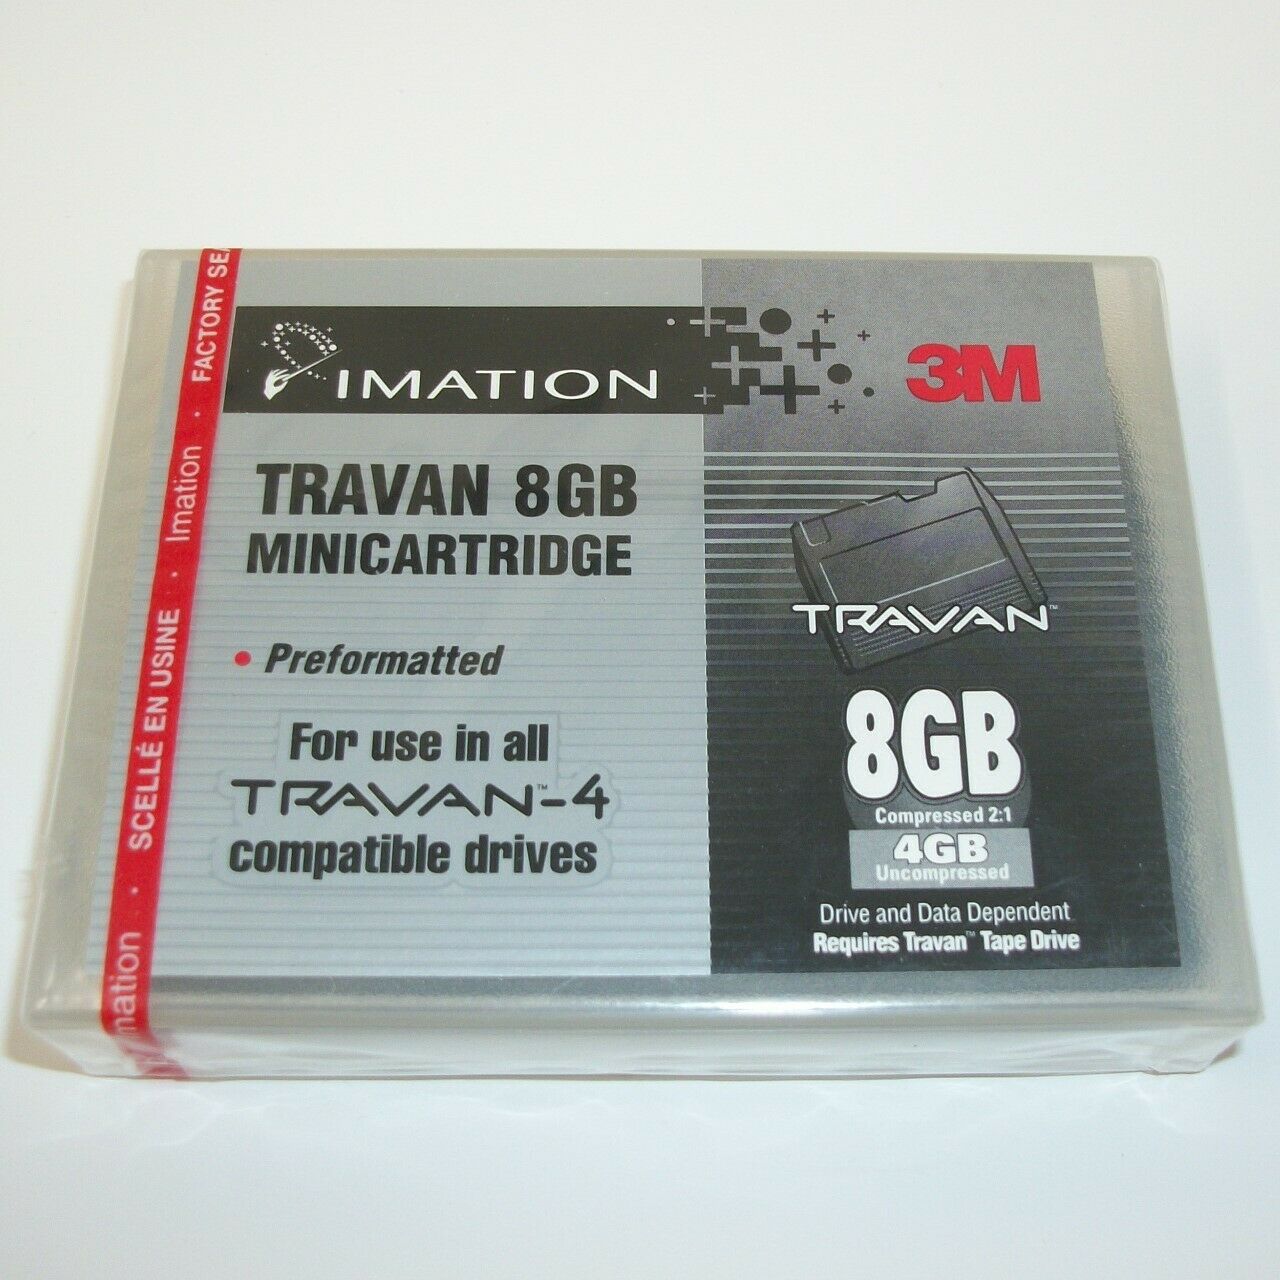 Imation 3m Travan Preformatted Minicartridge 8gb Compressed Travan-4 Tape Drive